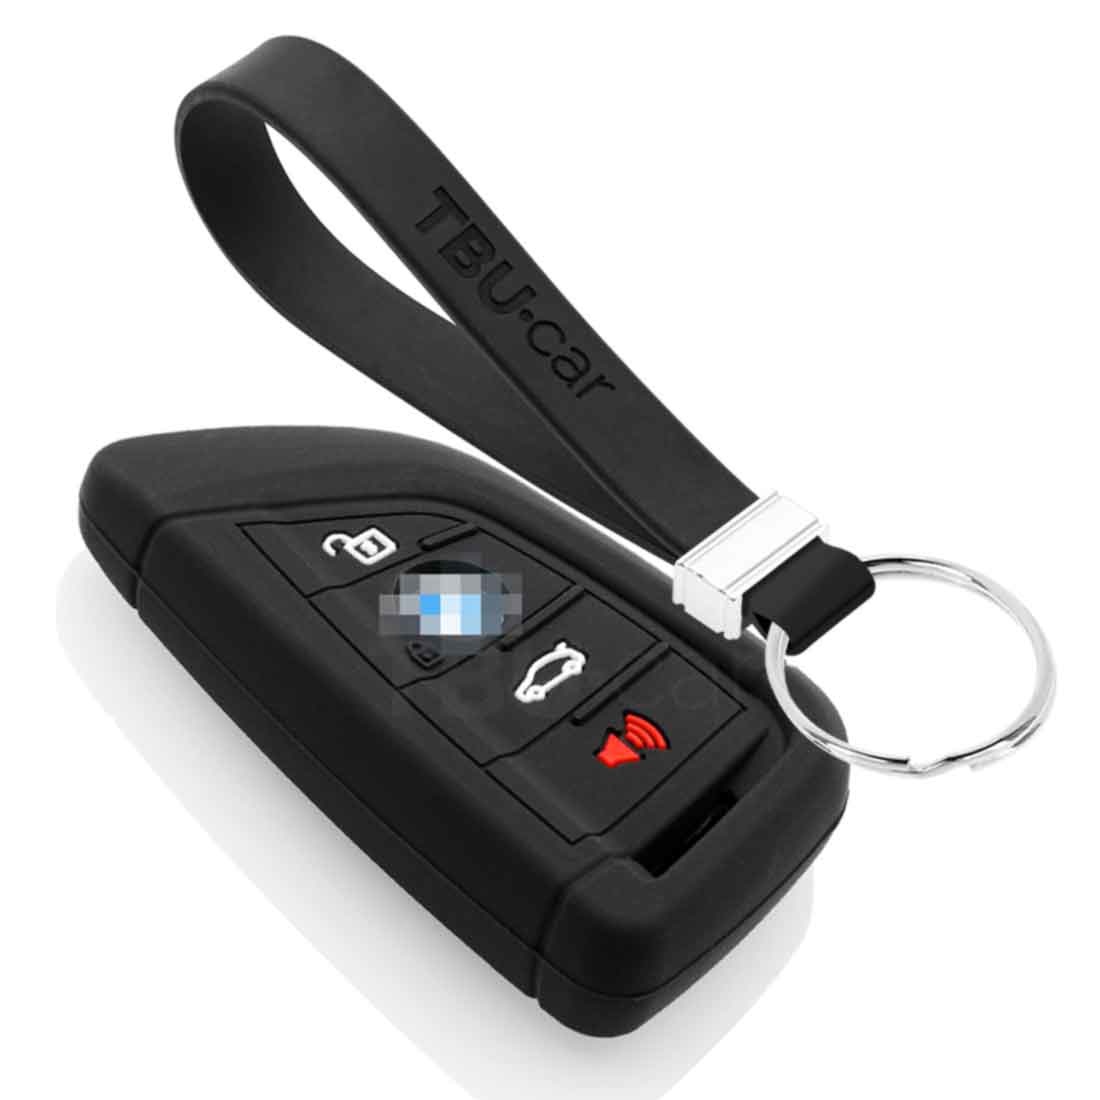 TBU car TBU car Car key cover compatible with BMW - Silicone Protective Remote Key Shell - FOB Case Cover - Black